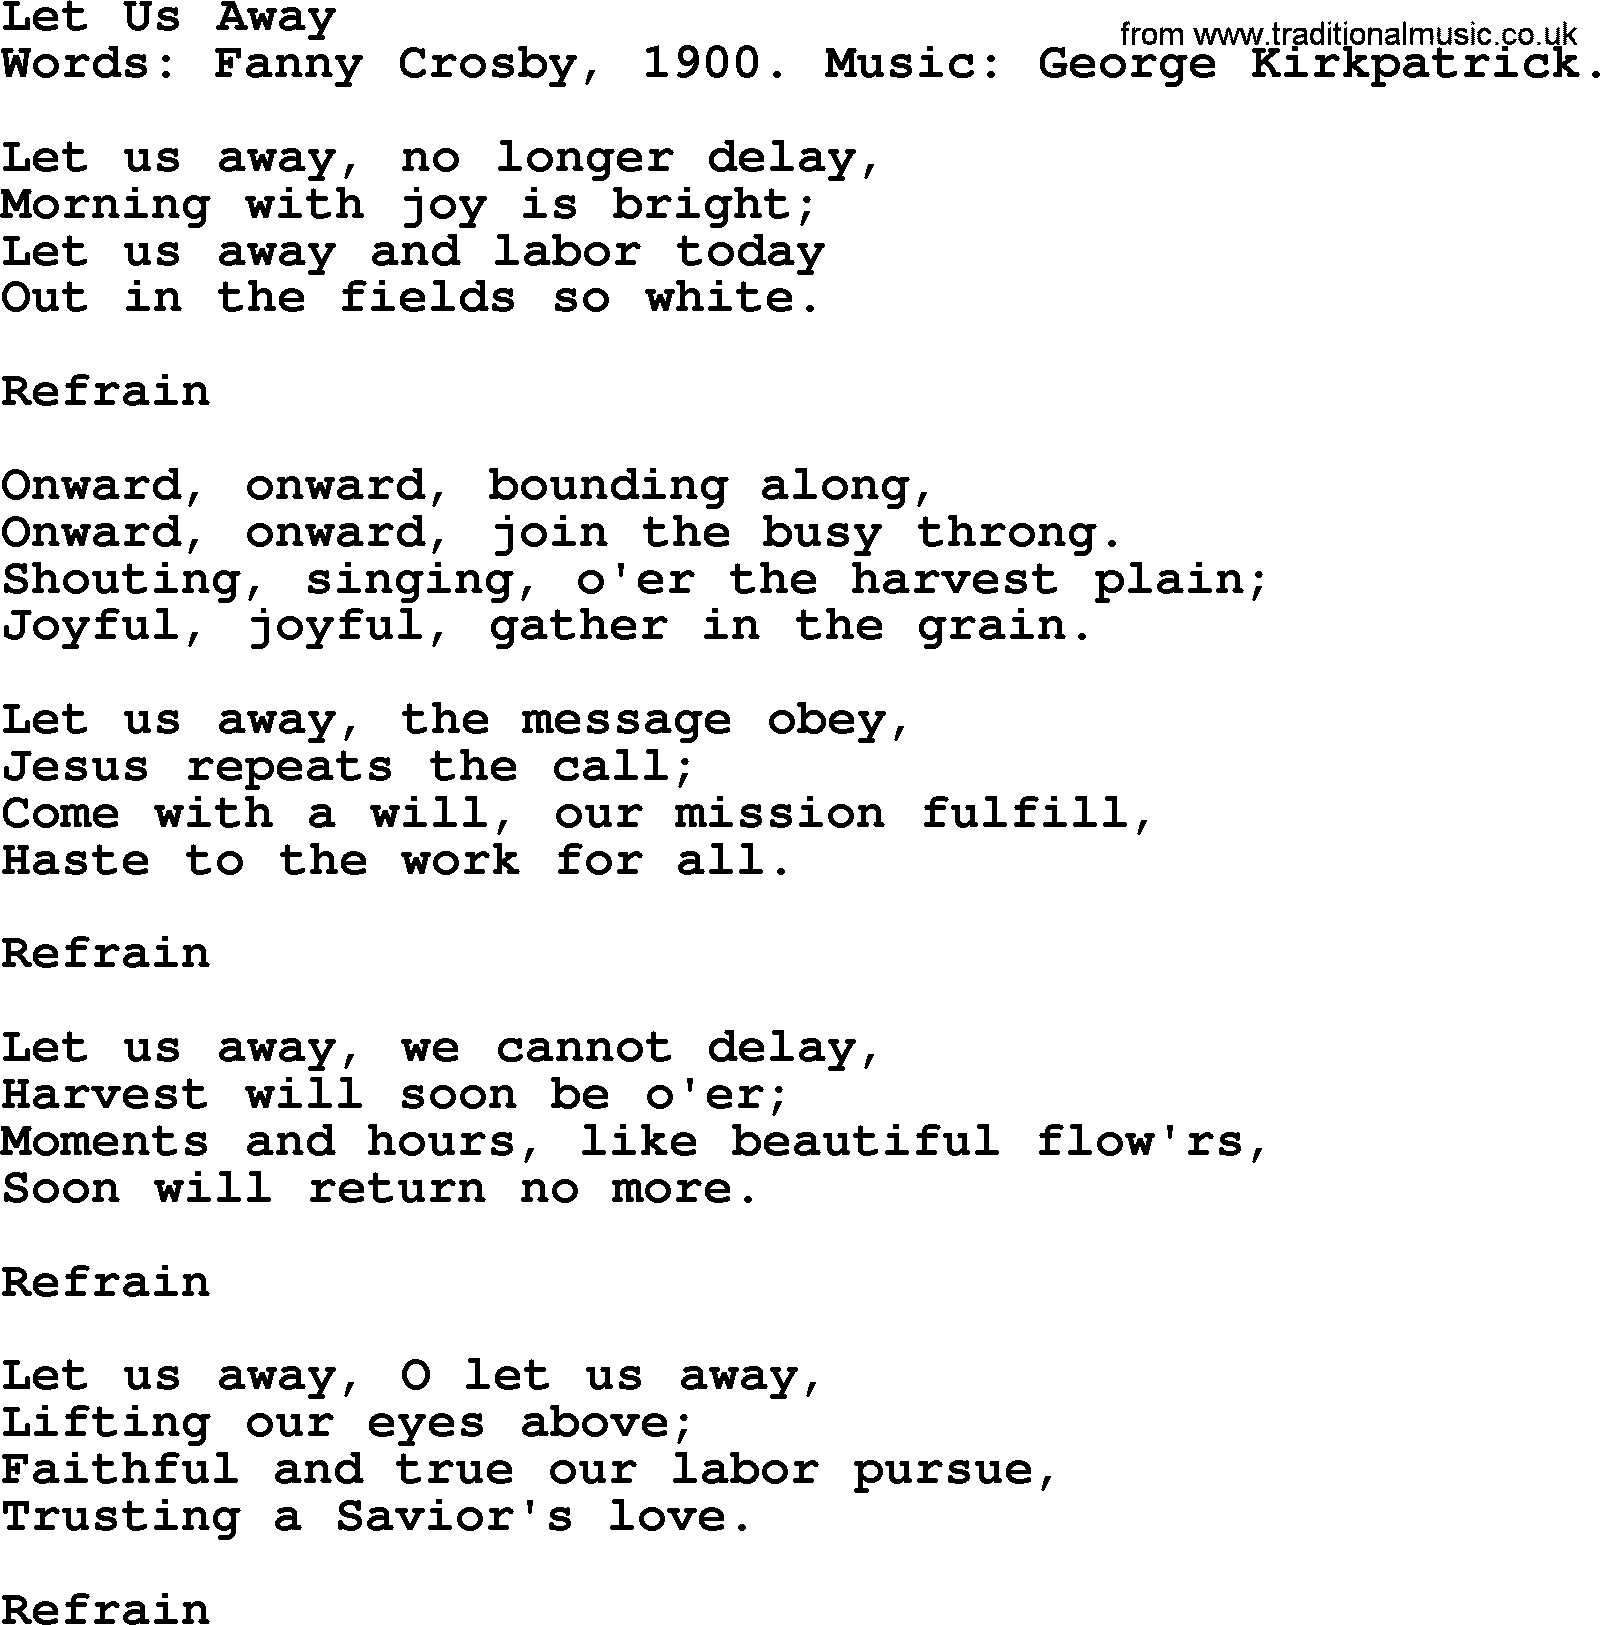 Fanny Crosby song: Let Us Away, lyrics